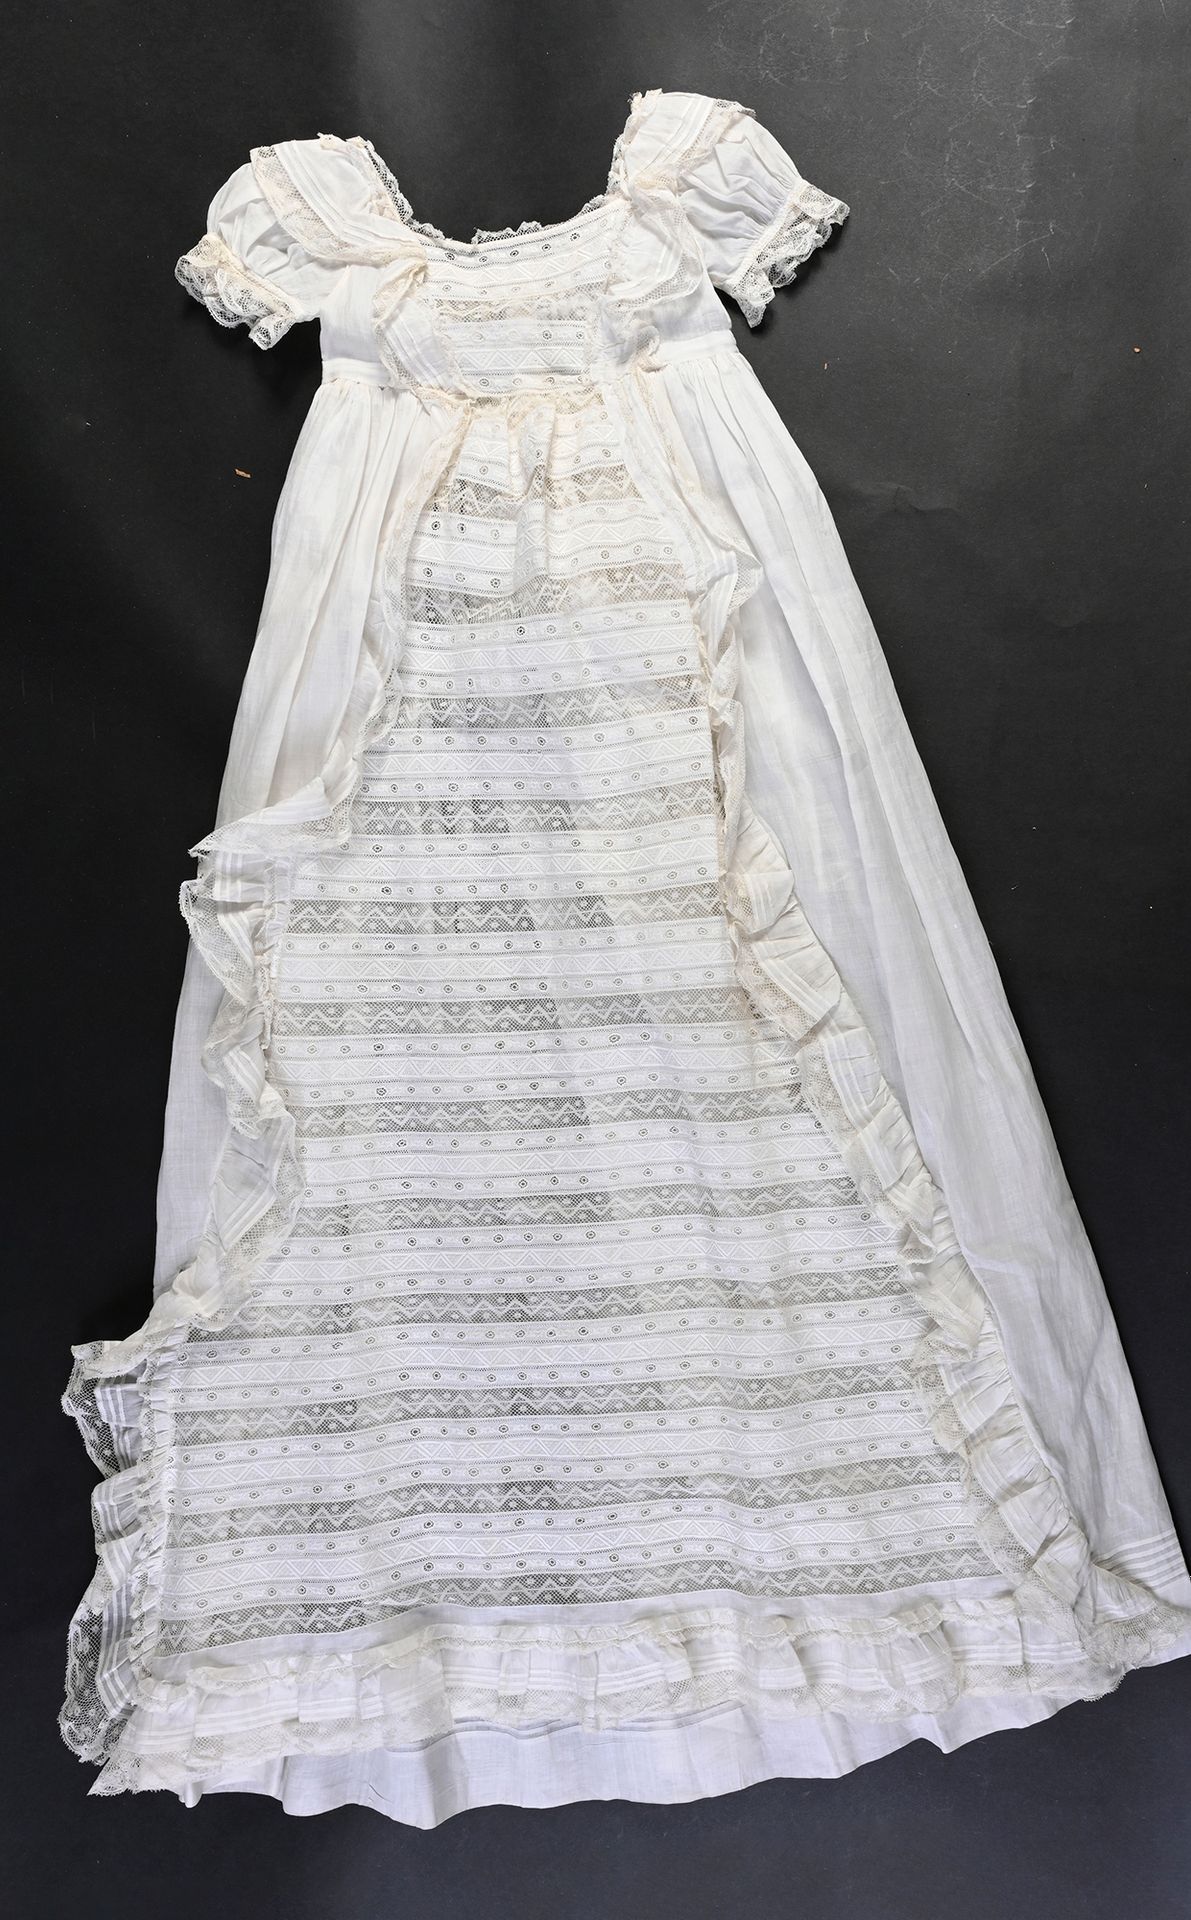 Null 一件绣花和蕾丝的洗礼礼服，19世纪末。
短袖连衣裙，裙子正面装饰有精致的刺绣entre-deux和Valenciennes bobbin花边，每侧有翻&hellip;